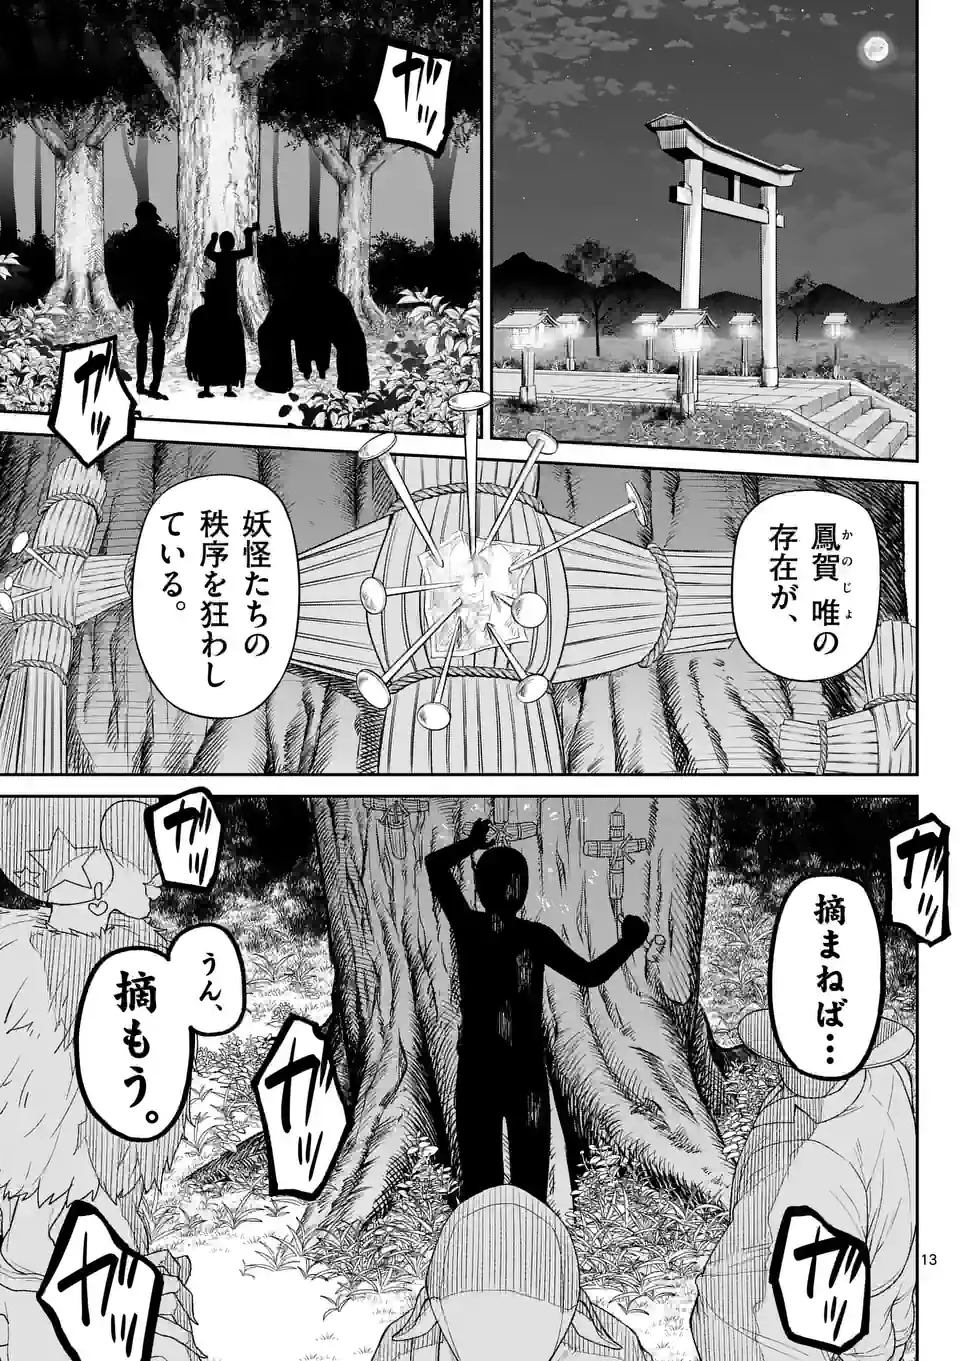 Bakemono Goroshi no Psycholily - Chapter 5 - Page 13